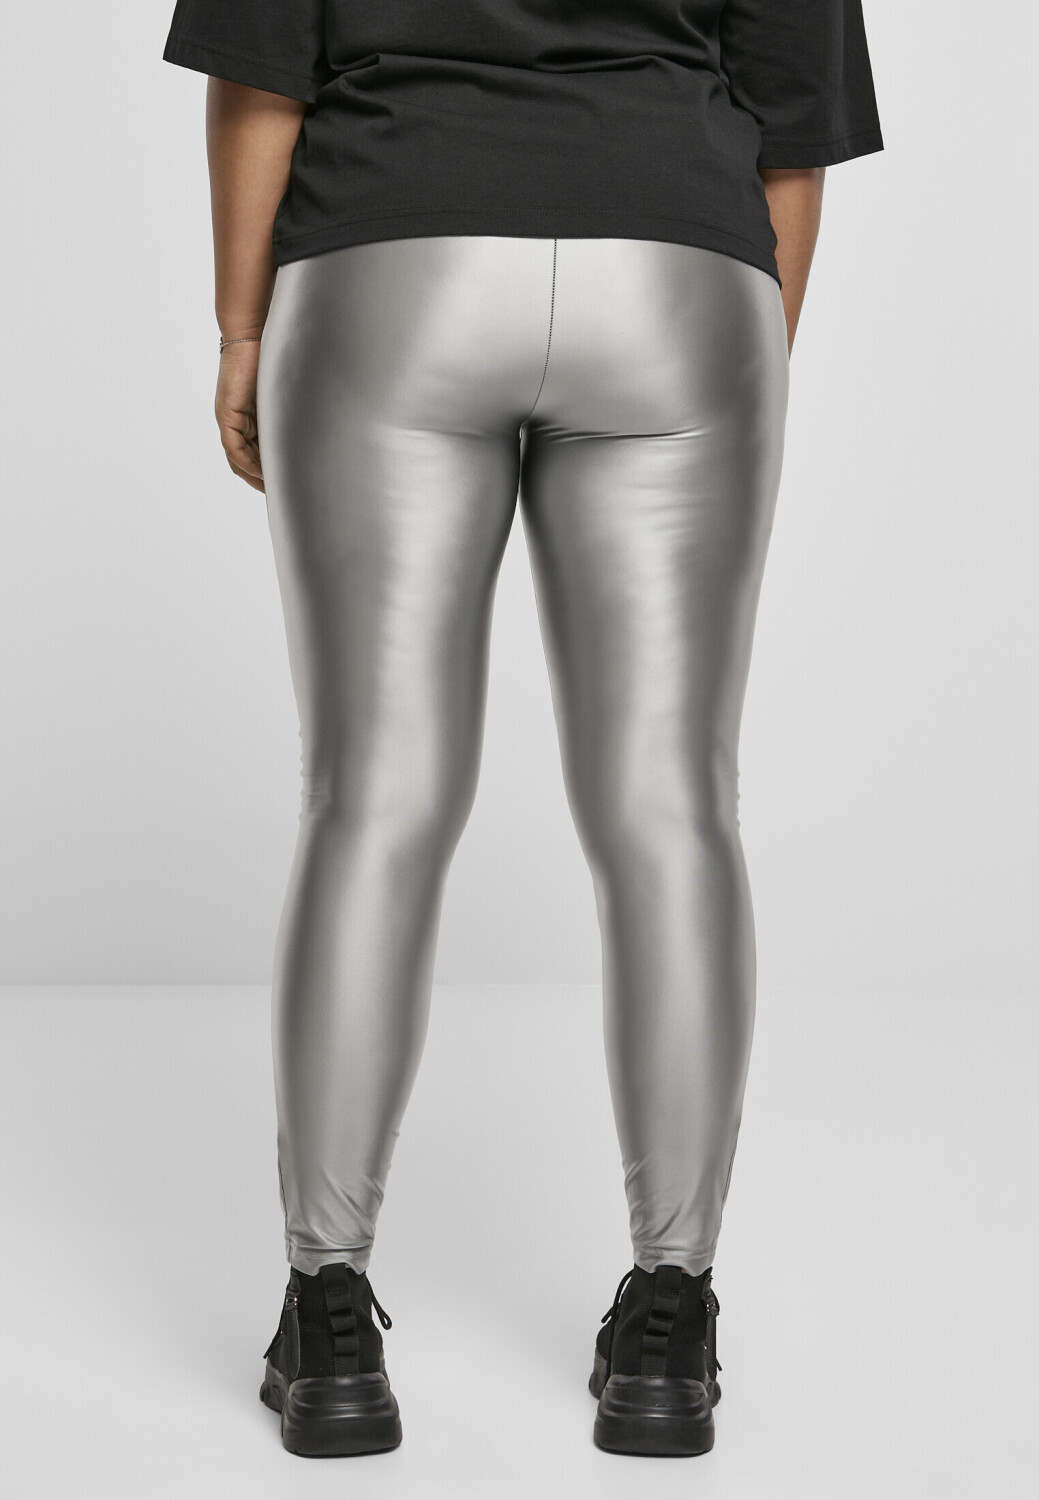 Leggings Urban Metalic Ladies (TB4344-03158-0039) 22,72 Highwaist bei | ab Shiny darksilver Classics € Preisvergleich